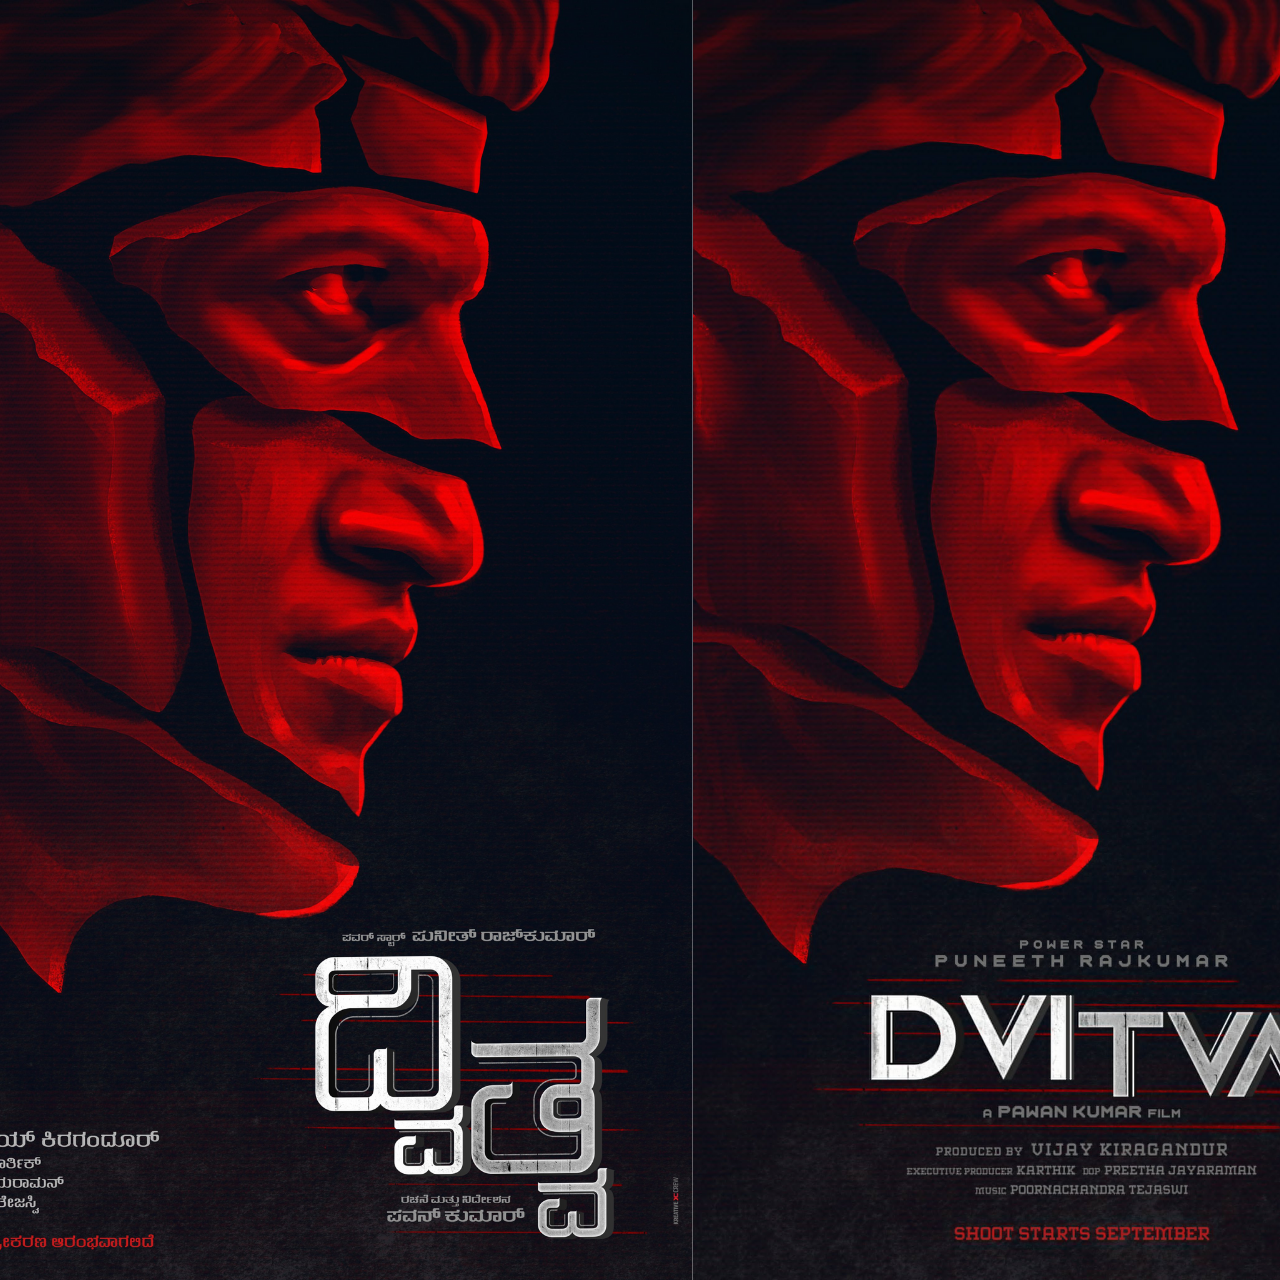 Hombale Films announced psychological drama thriller titled 'DVITVA', movie starring Puneeth Rajkumar